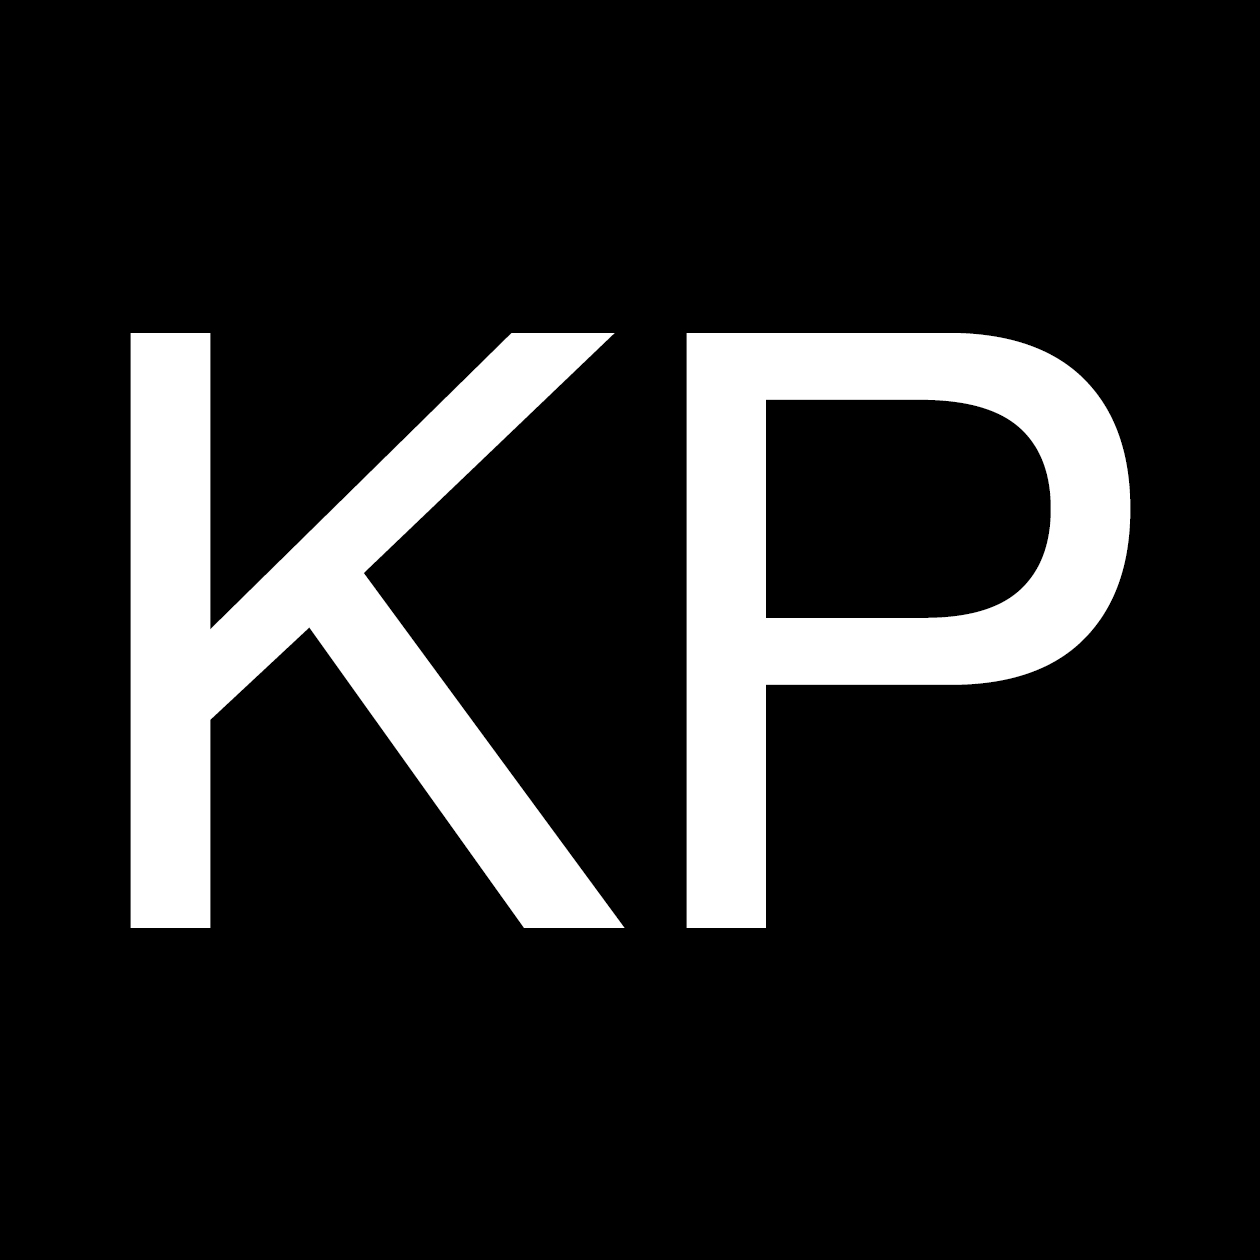 Kp Logos